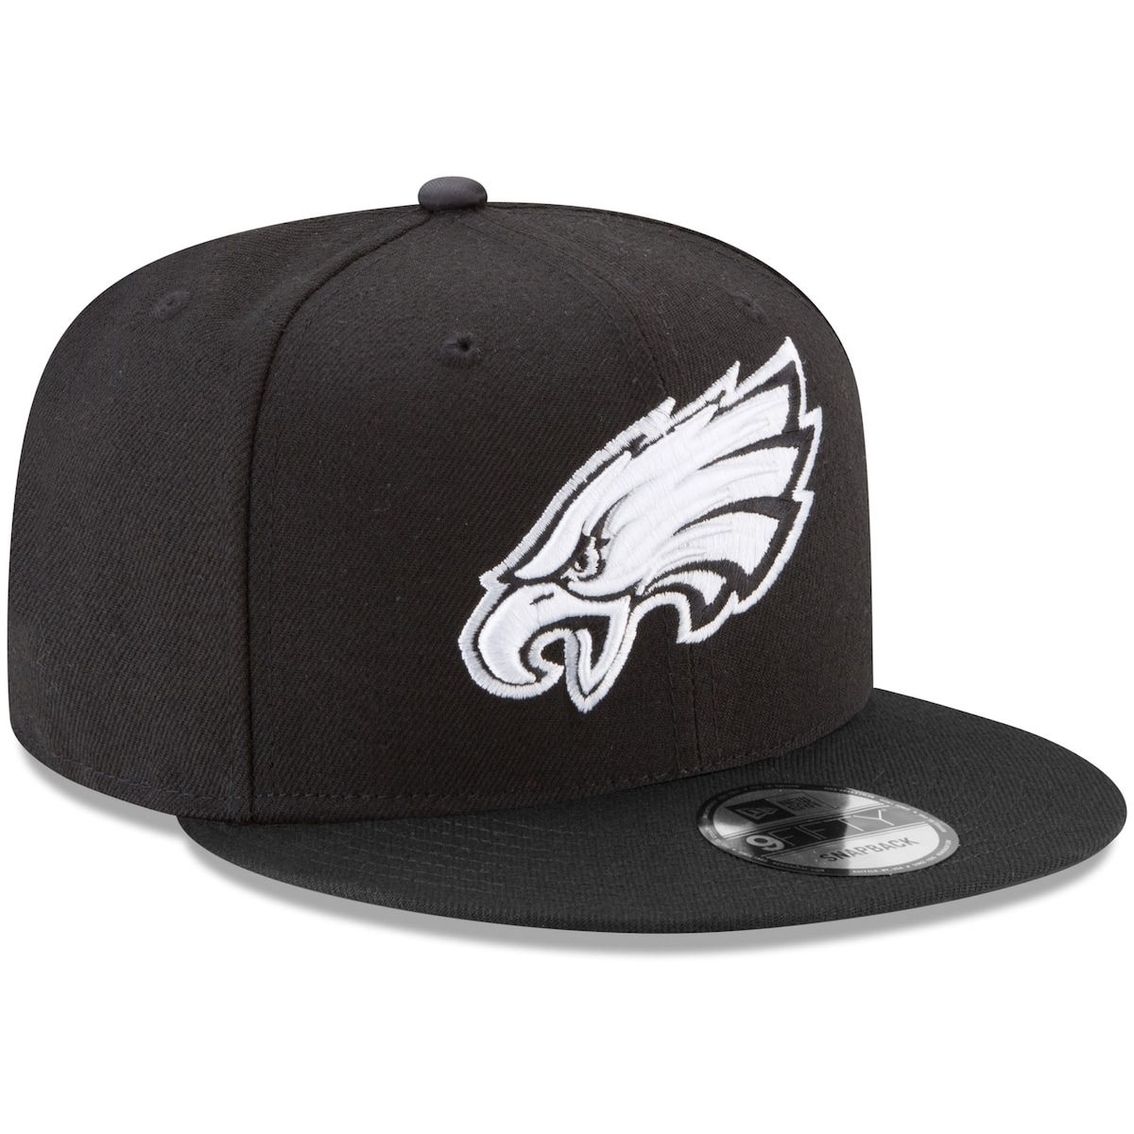 New Era Men's Black Philadelphia Eagles B-Dub 9FIFTY Adjustable Hat - Image 4 of 4